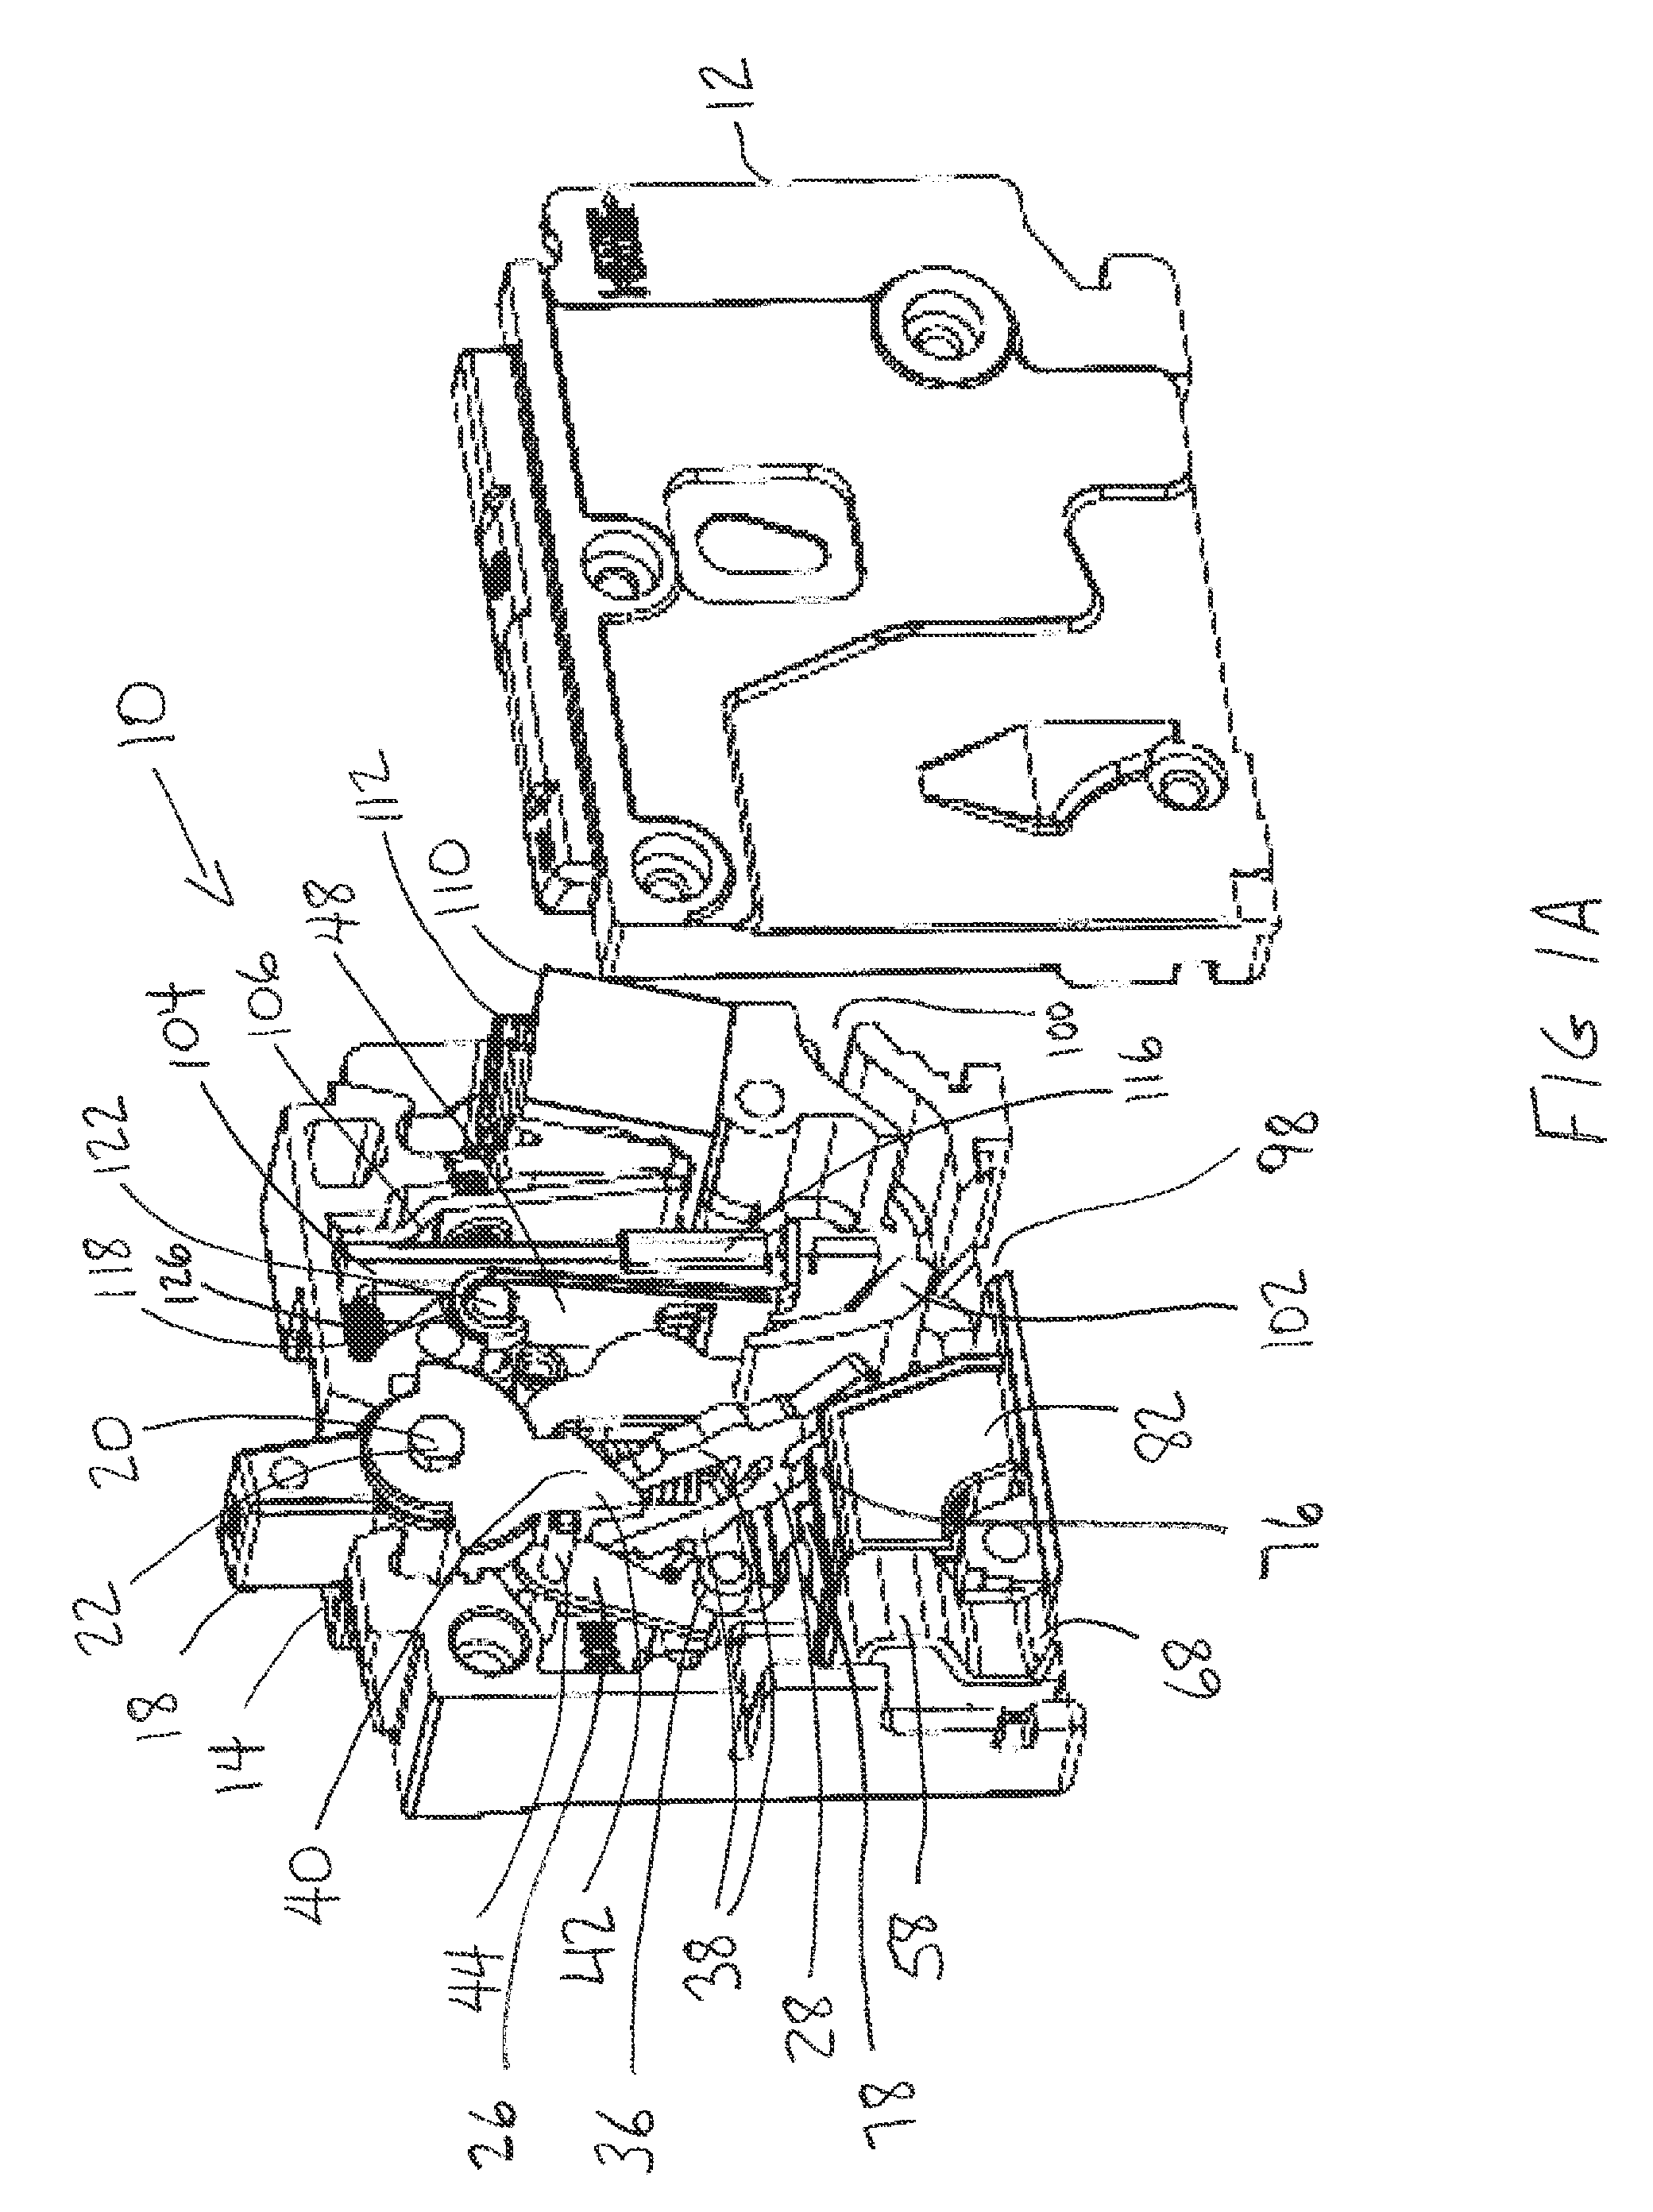 Circuit breaker having dual arc chamber